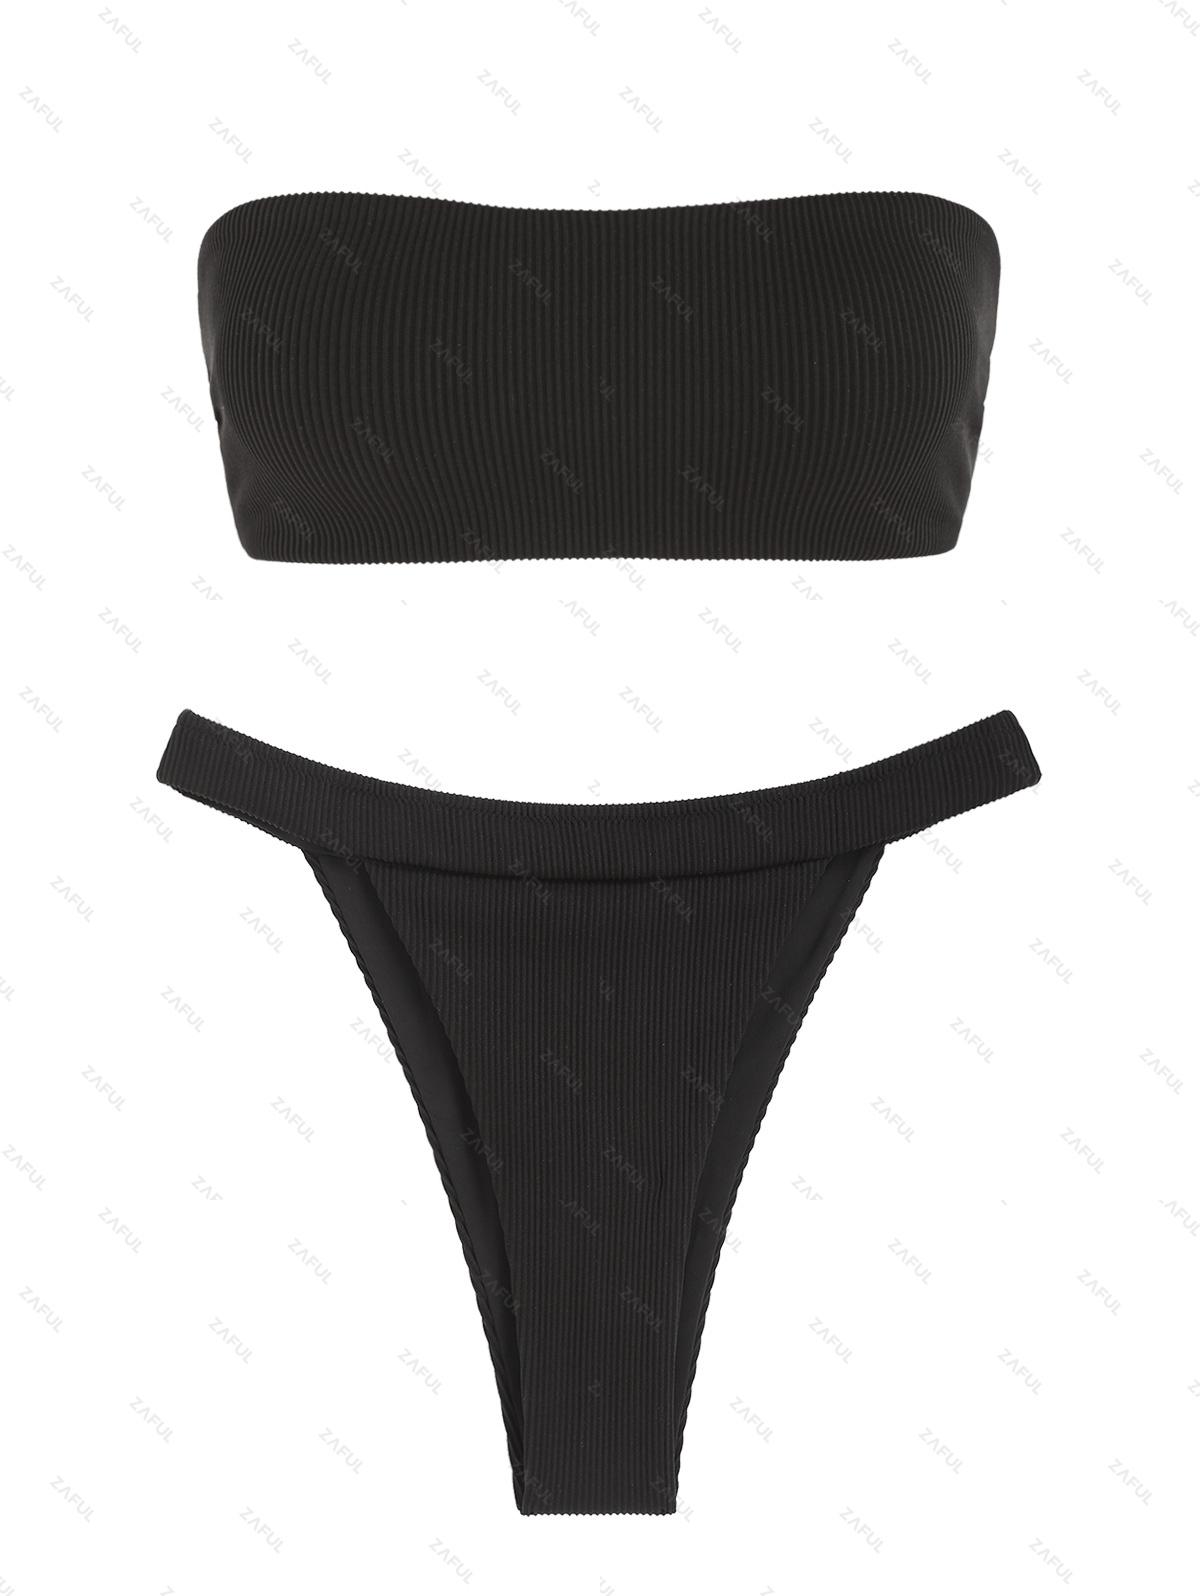 ZAFUL Textured Lace Up High Leg Bandeau Tanga Bikini Swimwear M Black